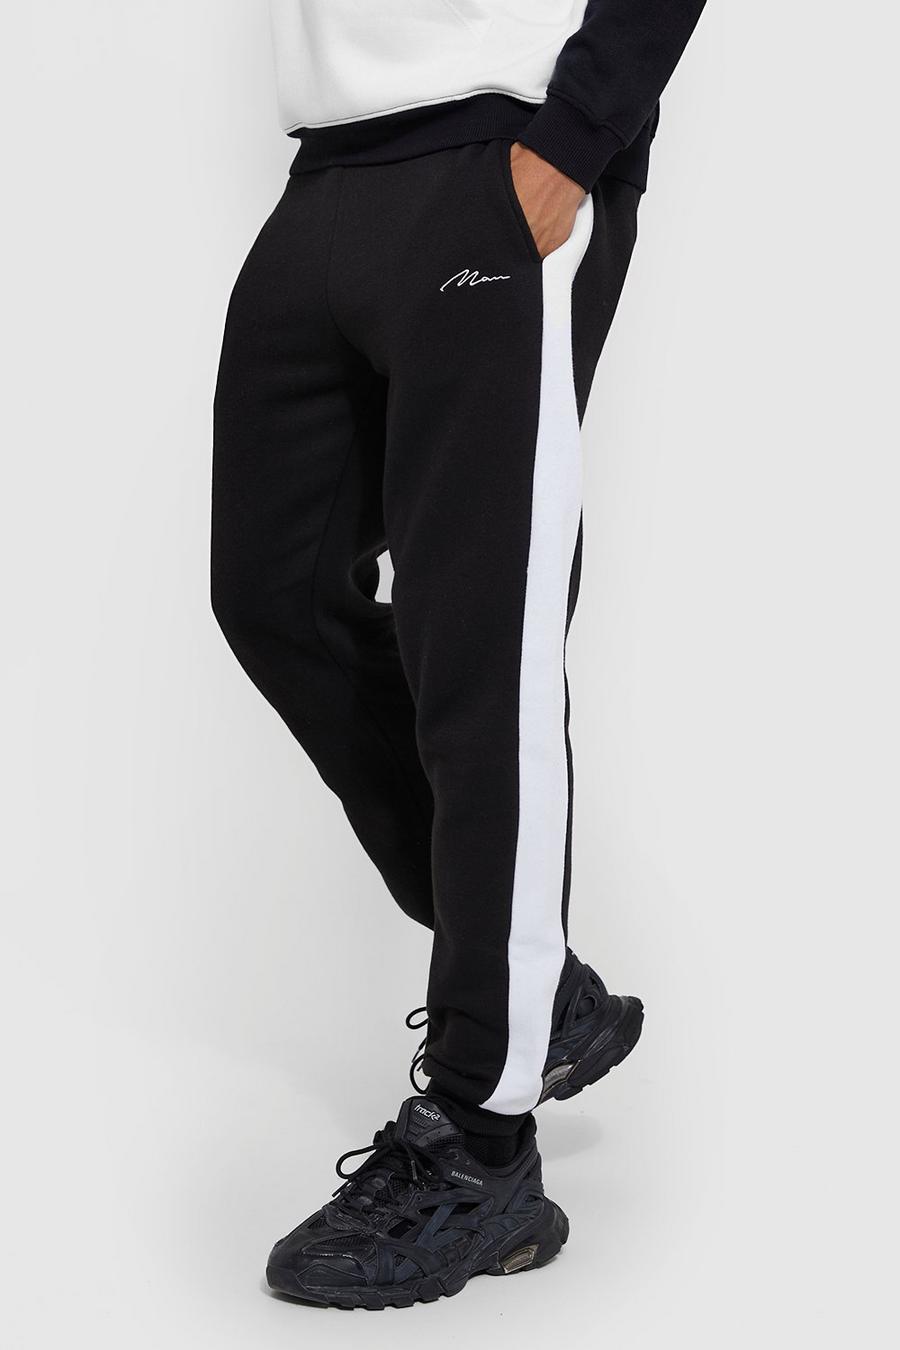 Pantalón deportivo Tall pitillo con letras MAN y panel lateral, Black image number 1